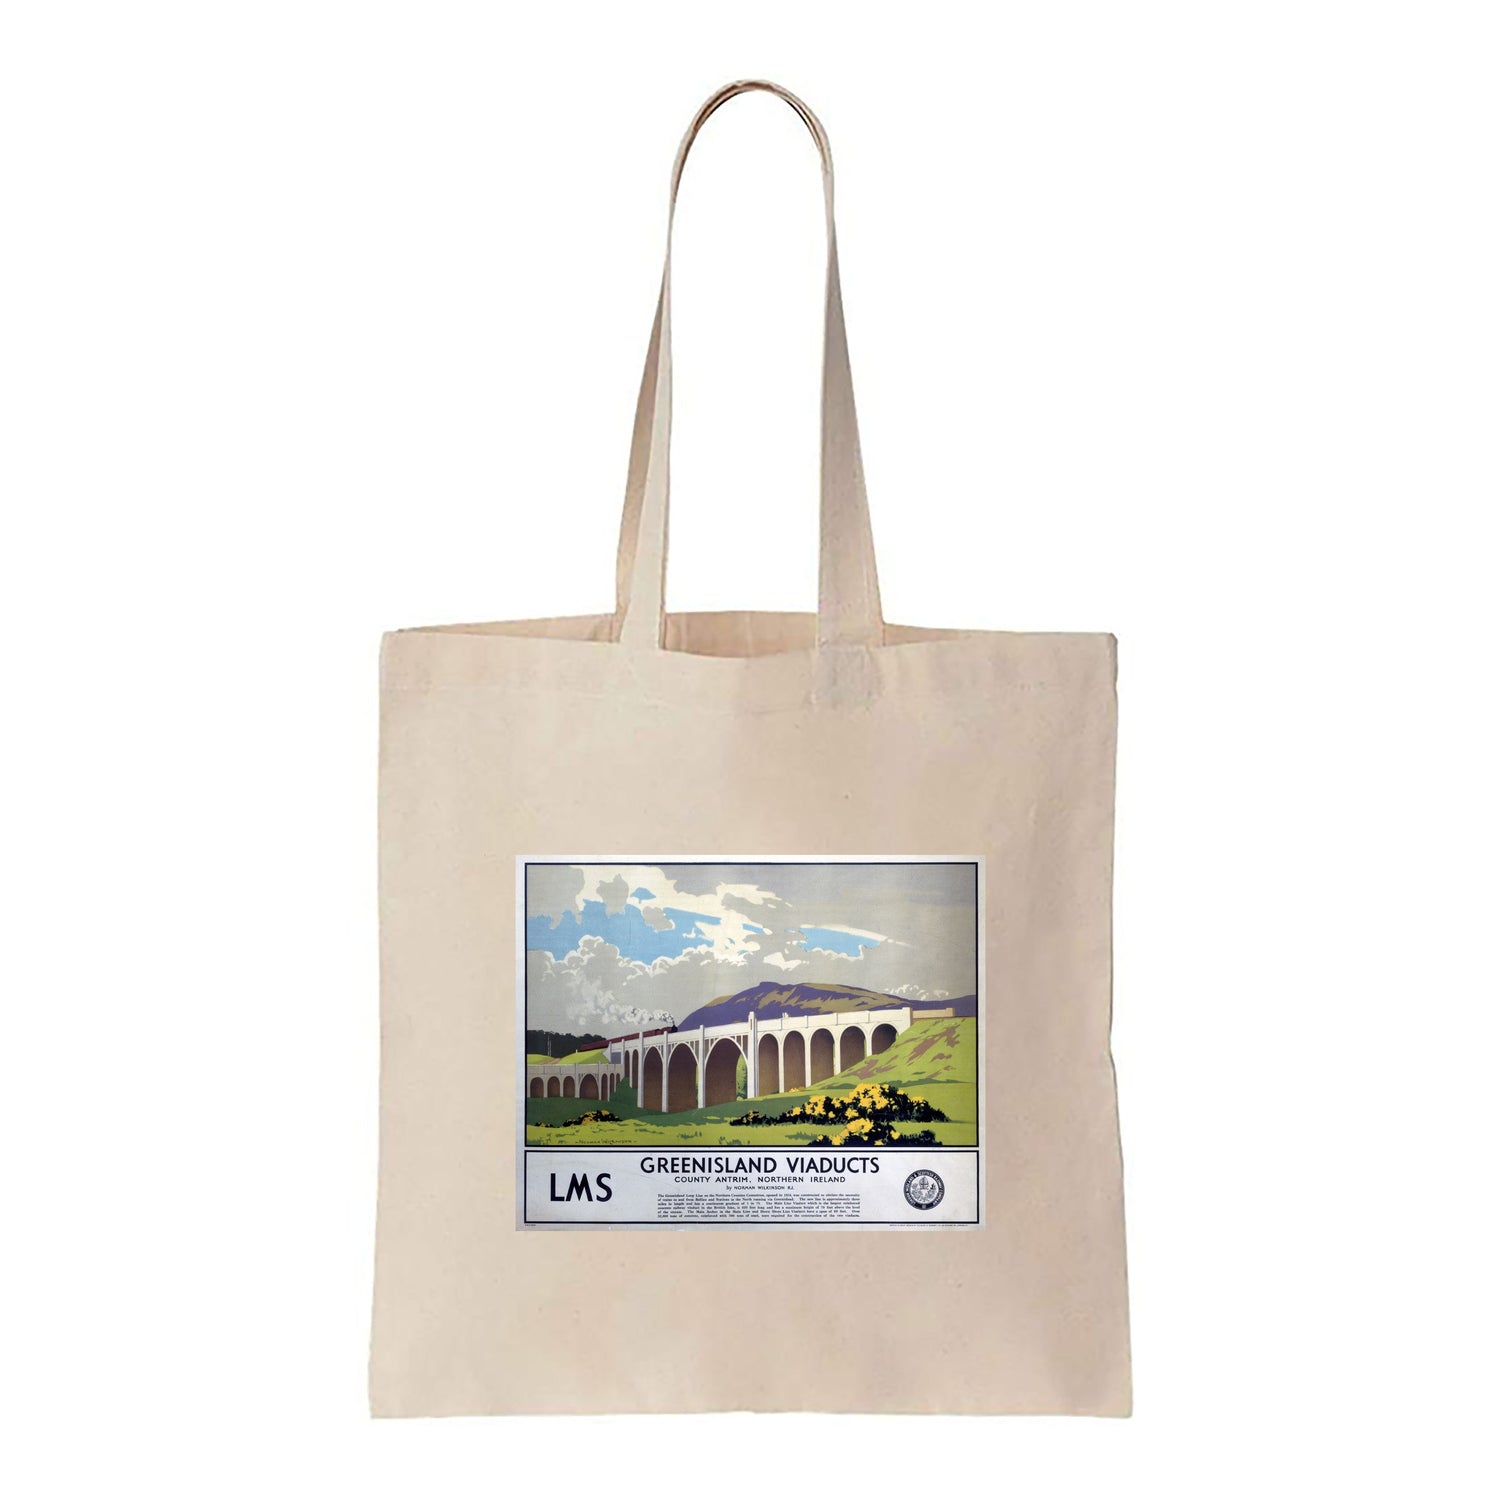 Greenisland Viaducts LMS - Canvas Tote Bag